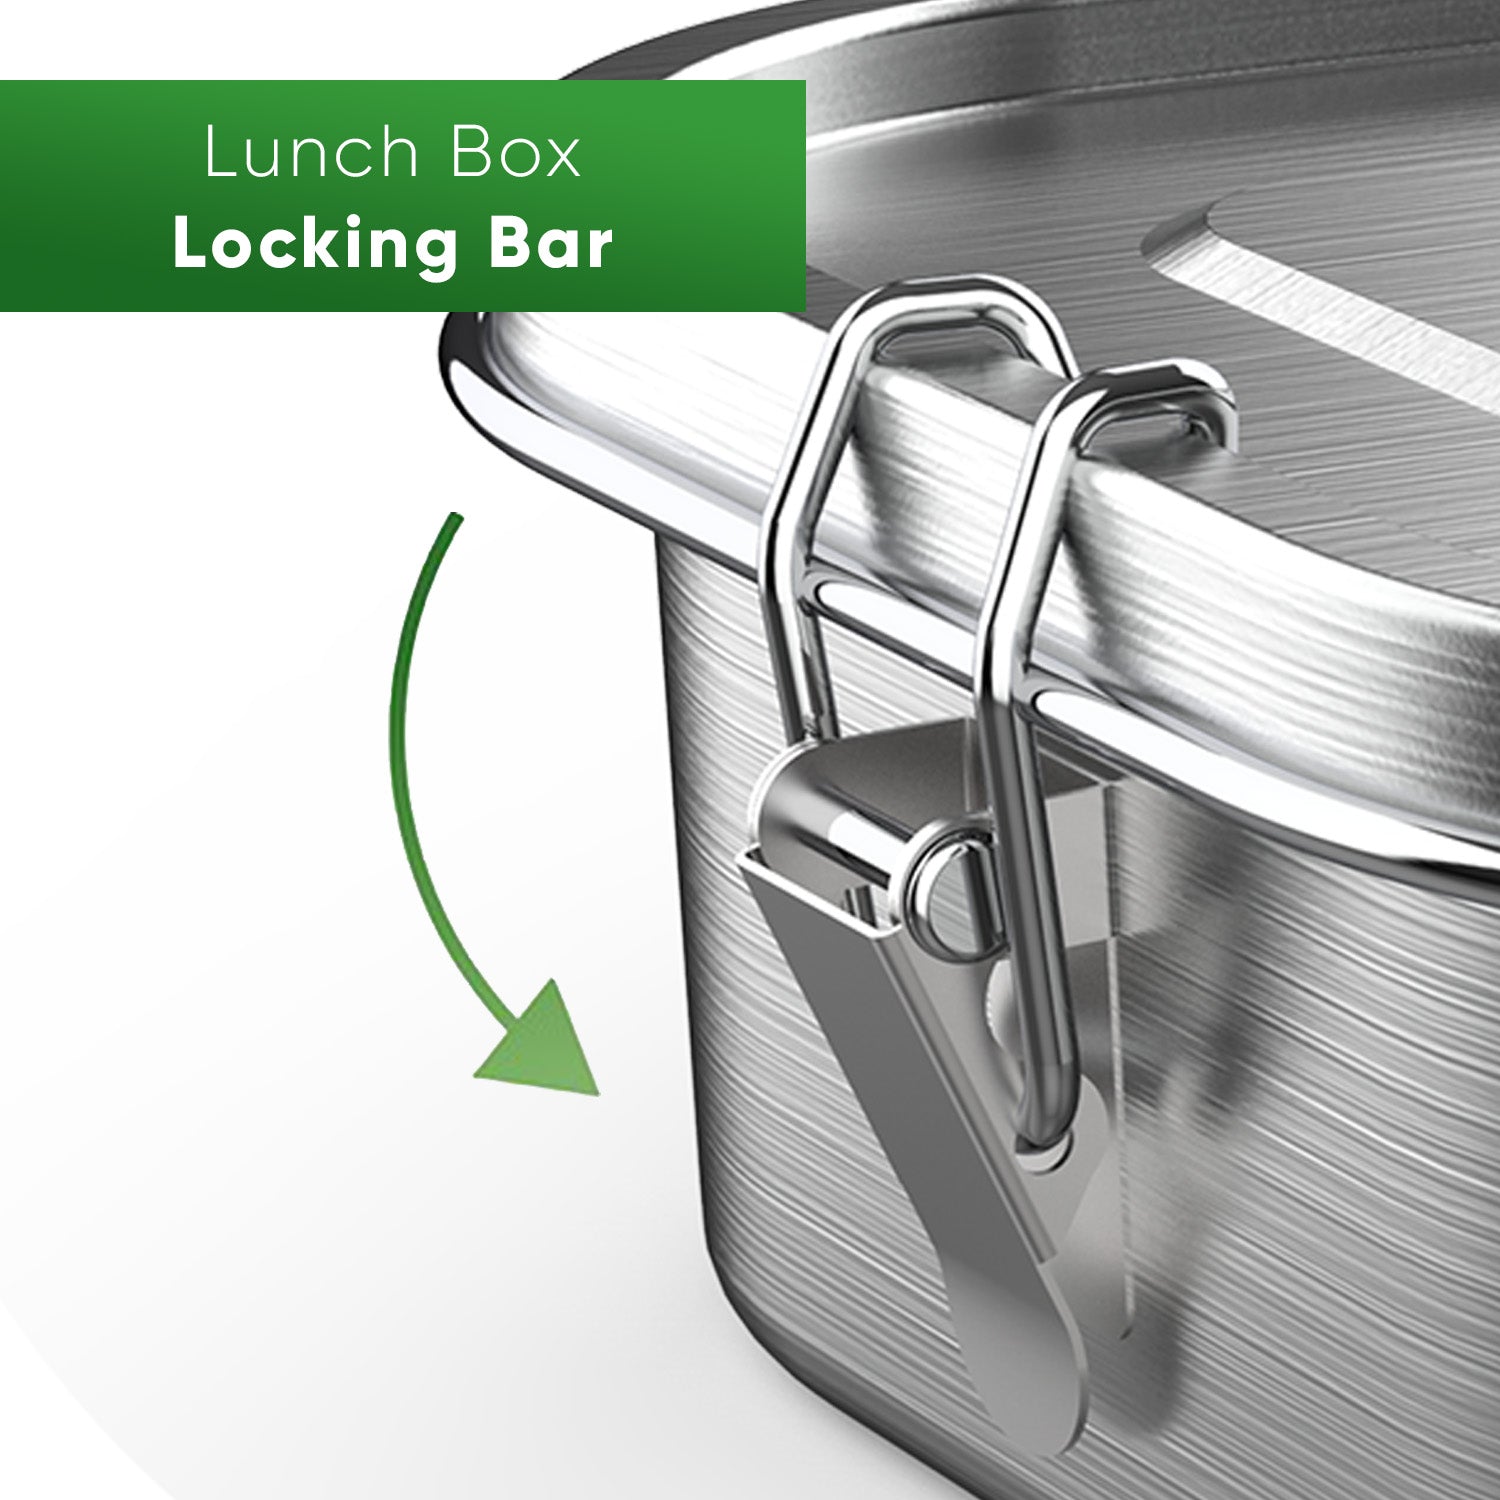 Stainless Steel Lunch Box -  Locking Bar Set